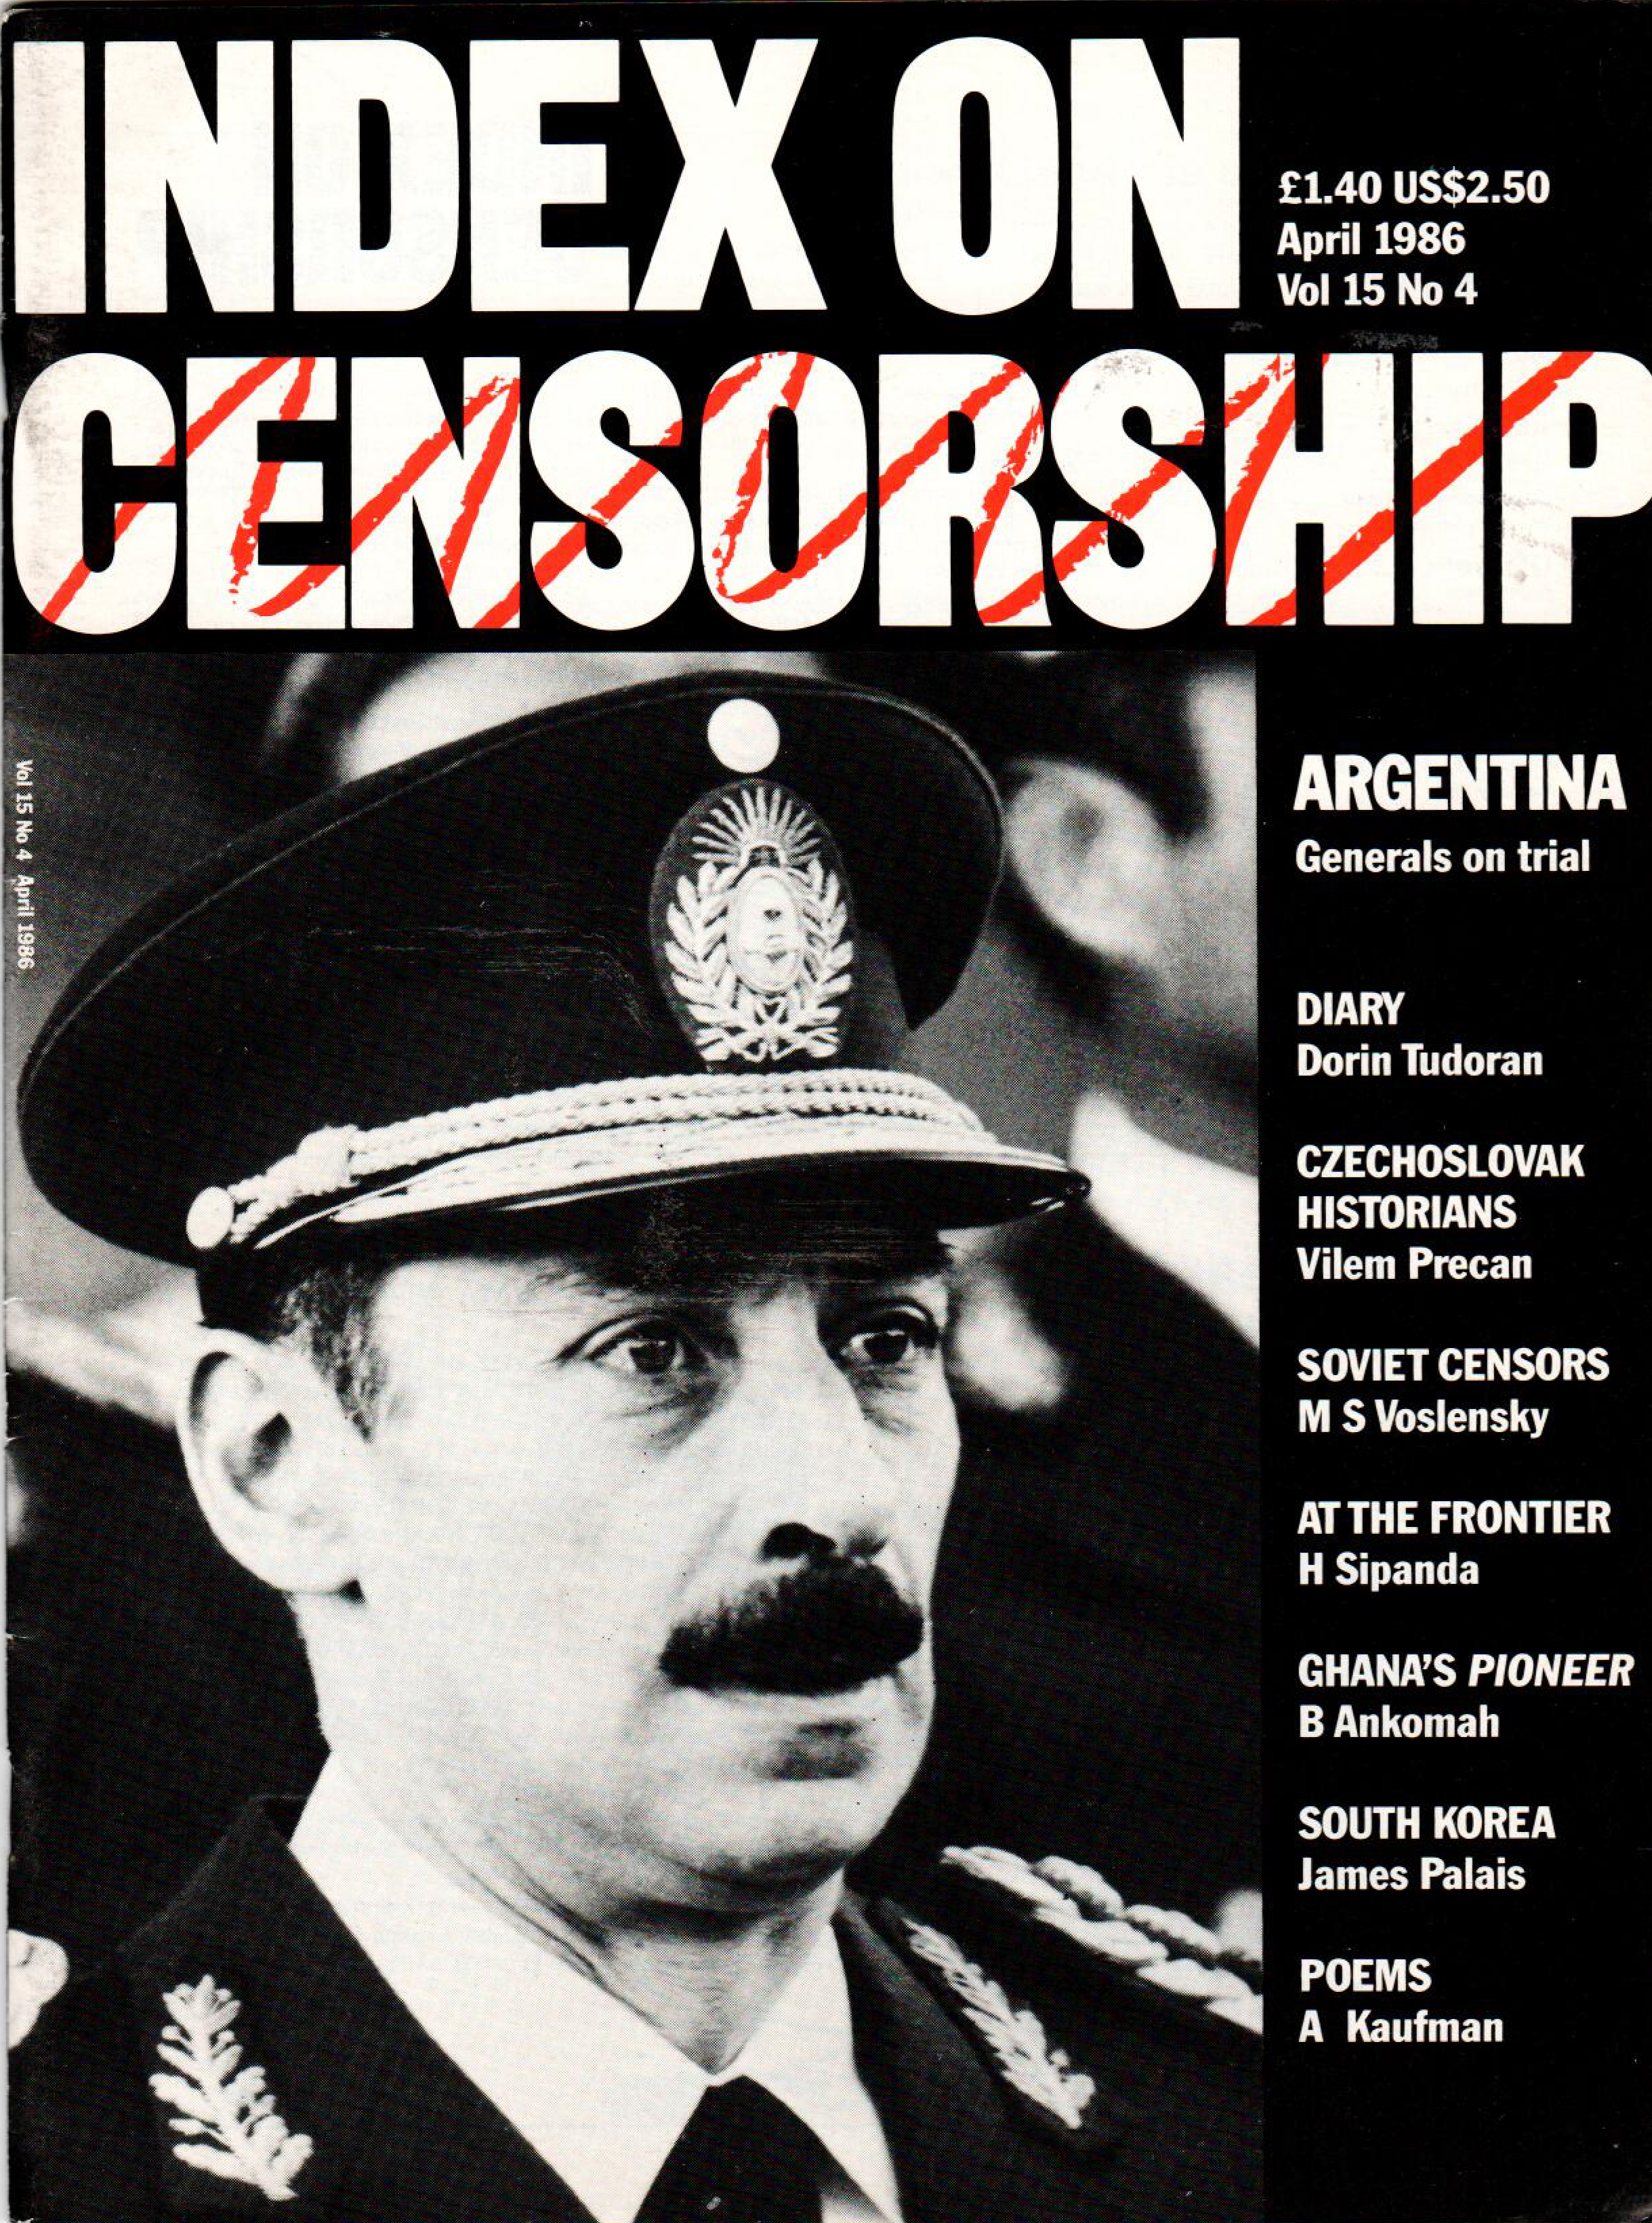 Argentina: Generals on trial